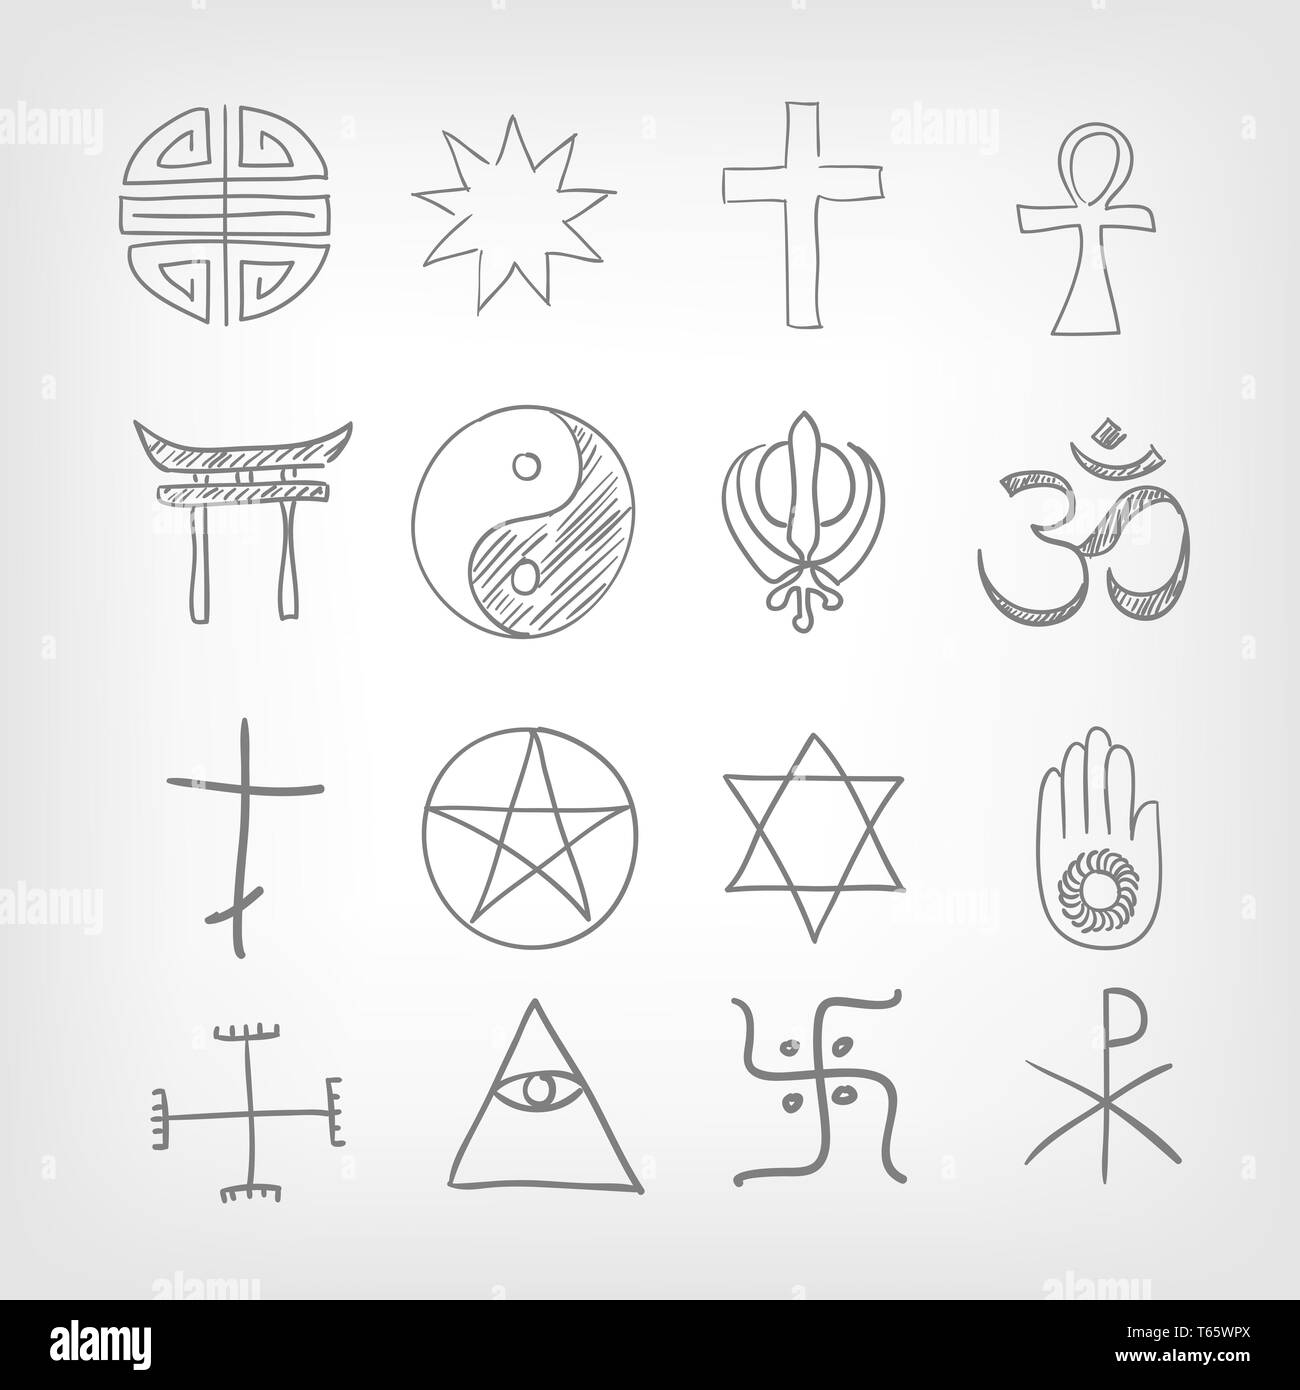 Religious symbolism Stock Photo